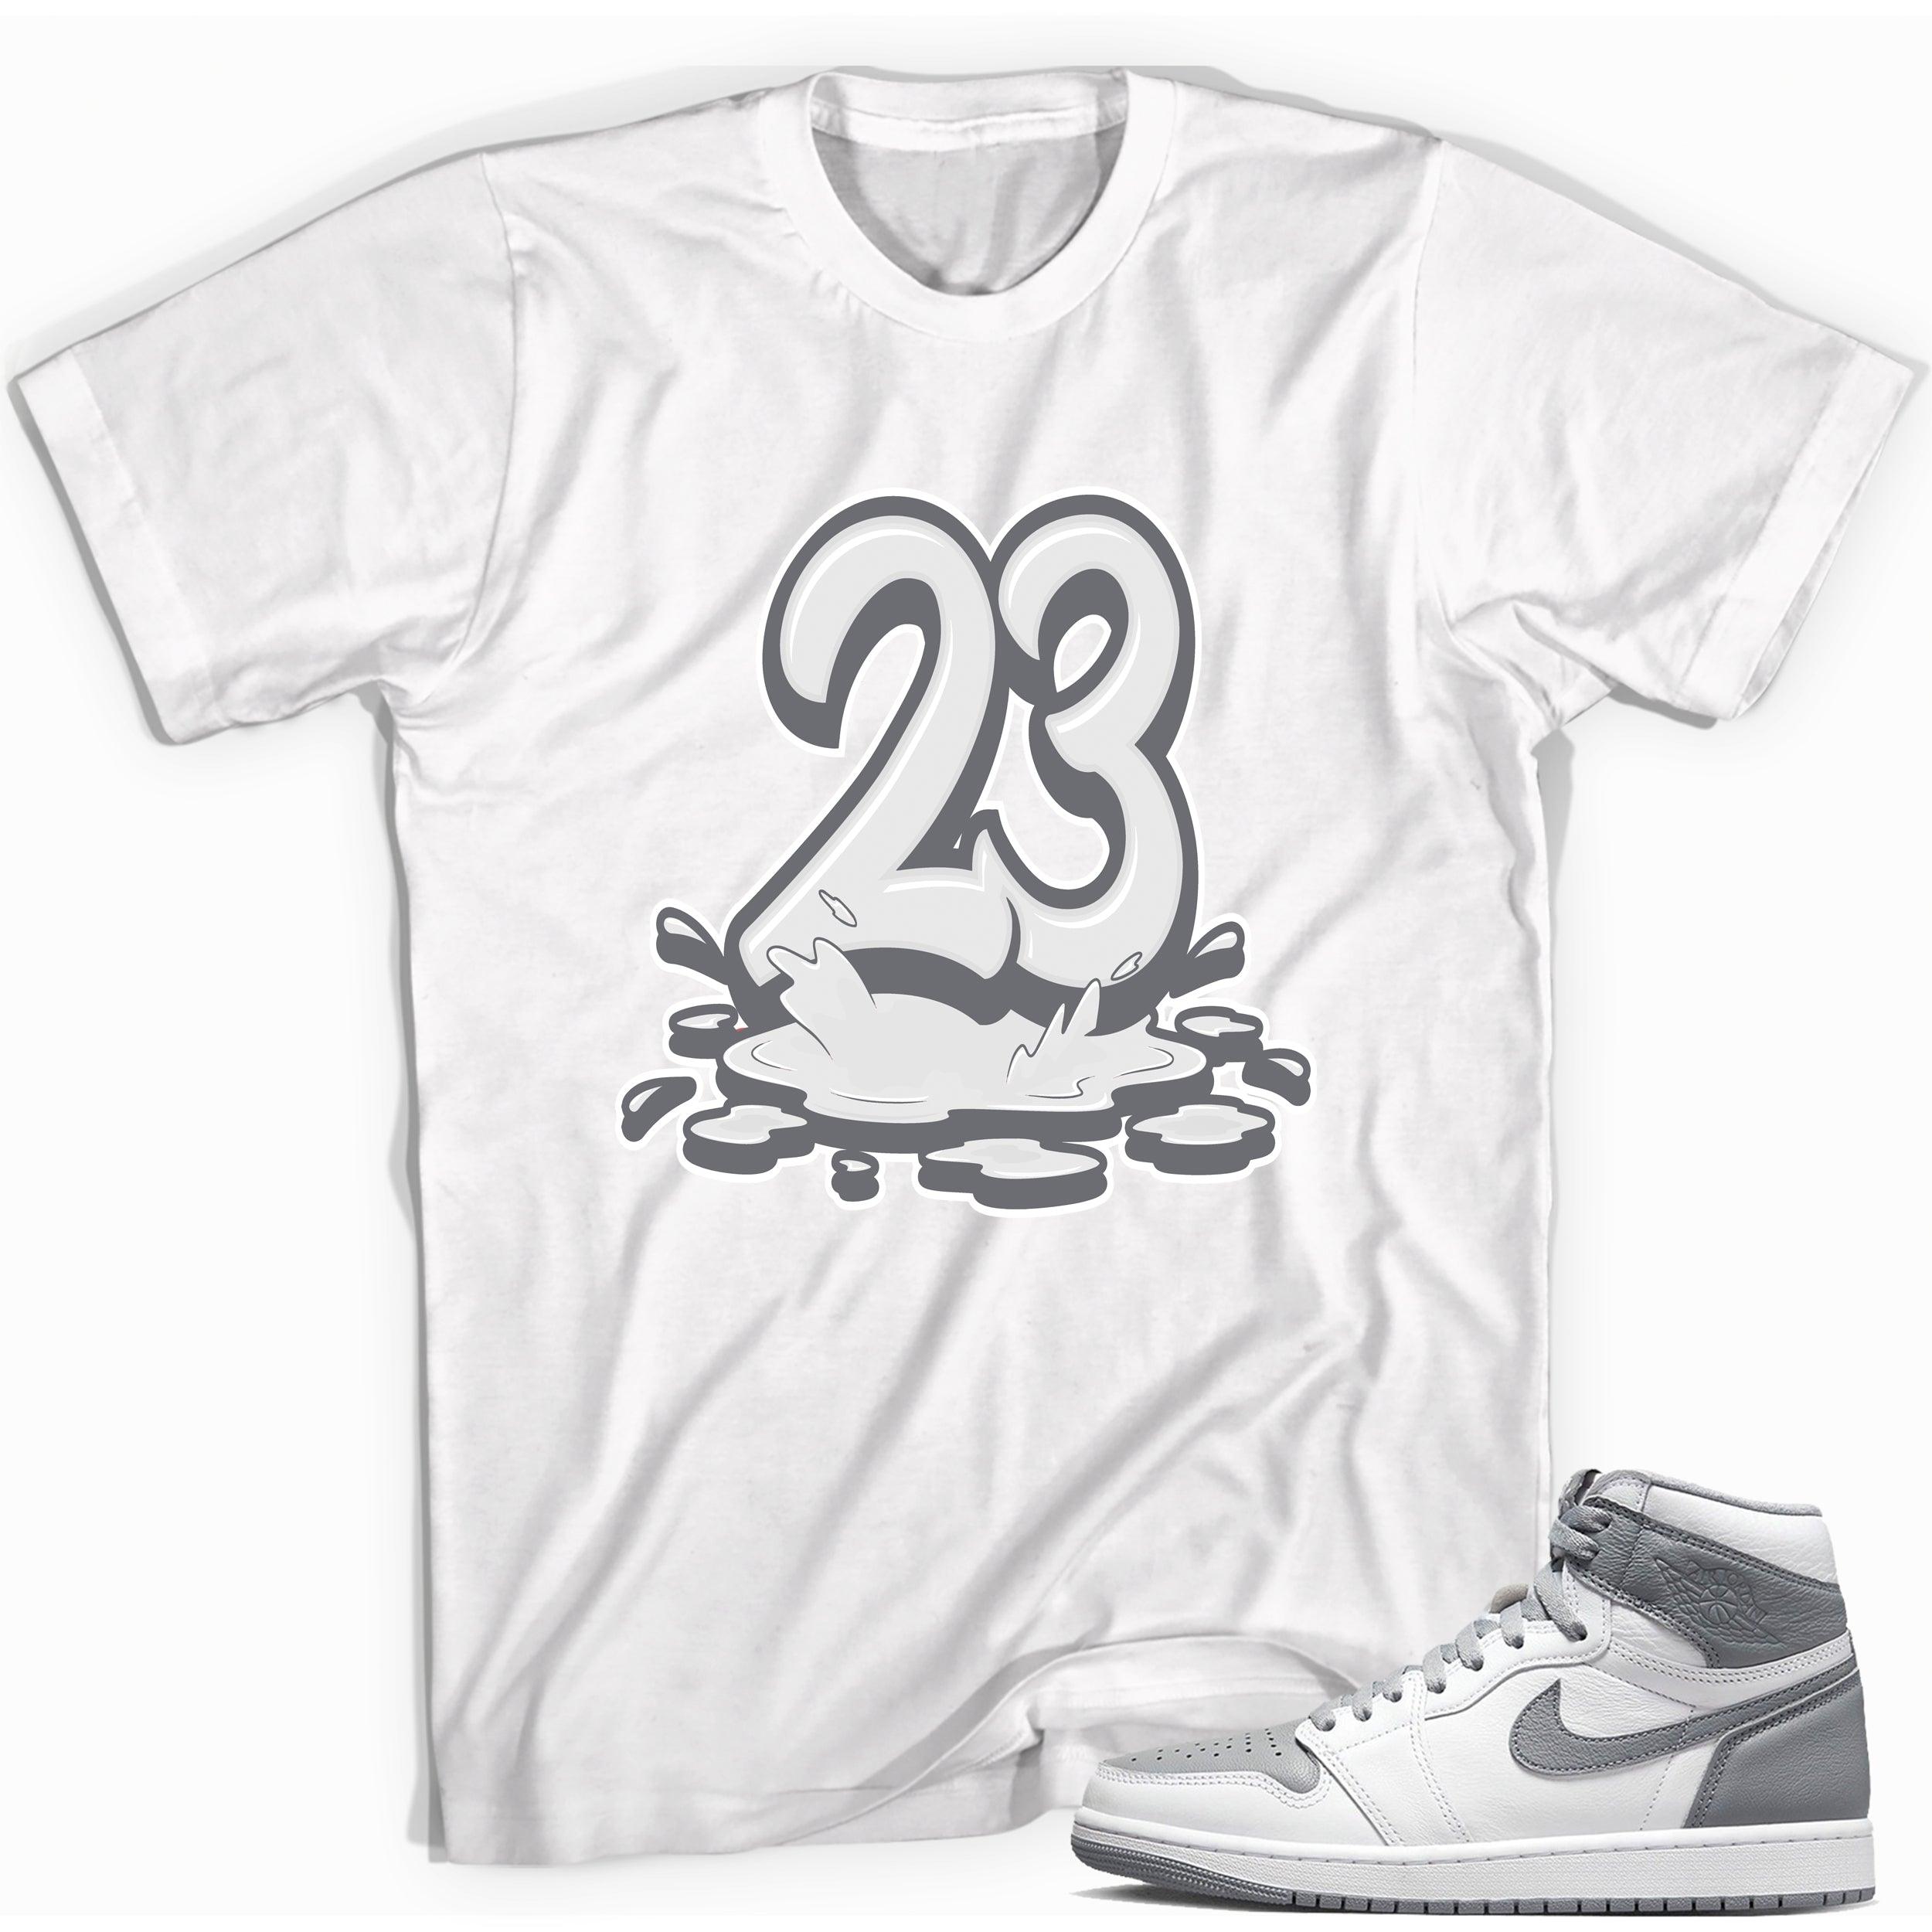 Number 23 Shirt for Jordan 1s photo